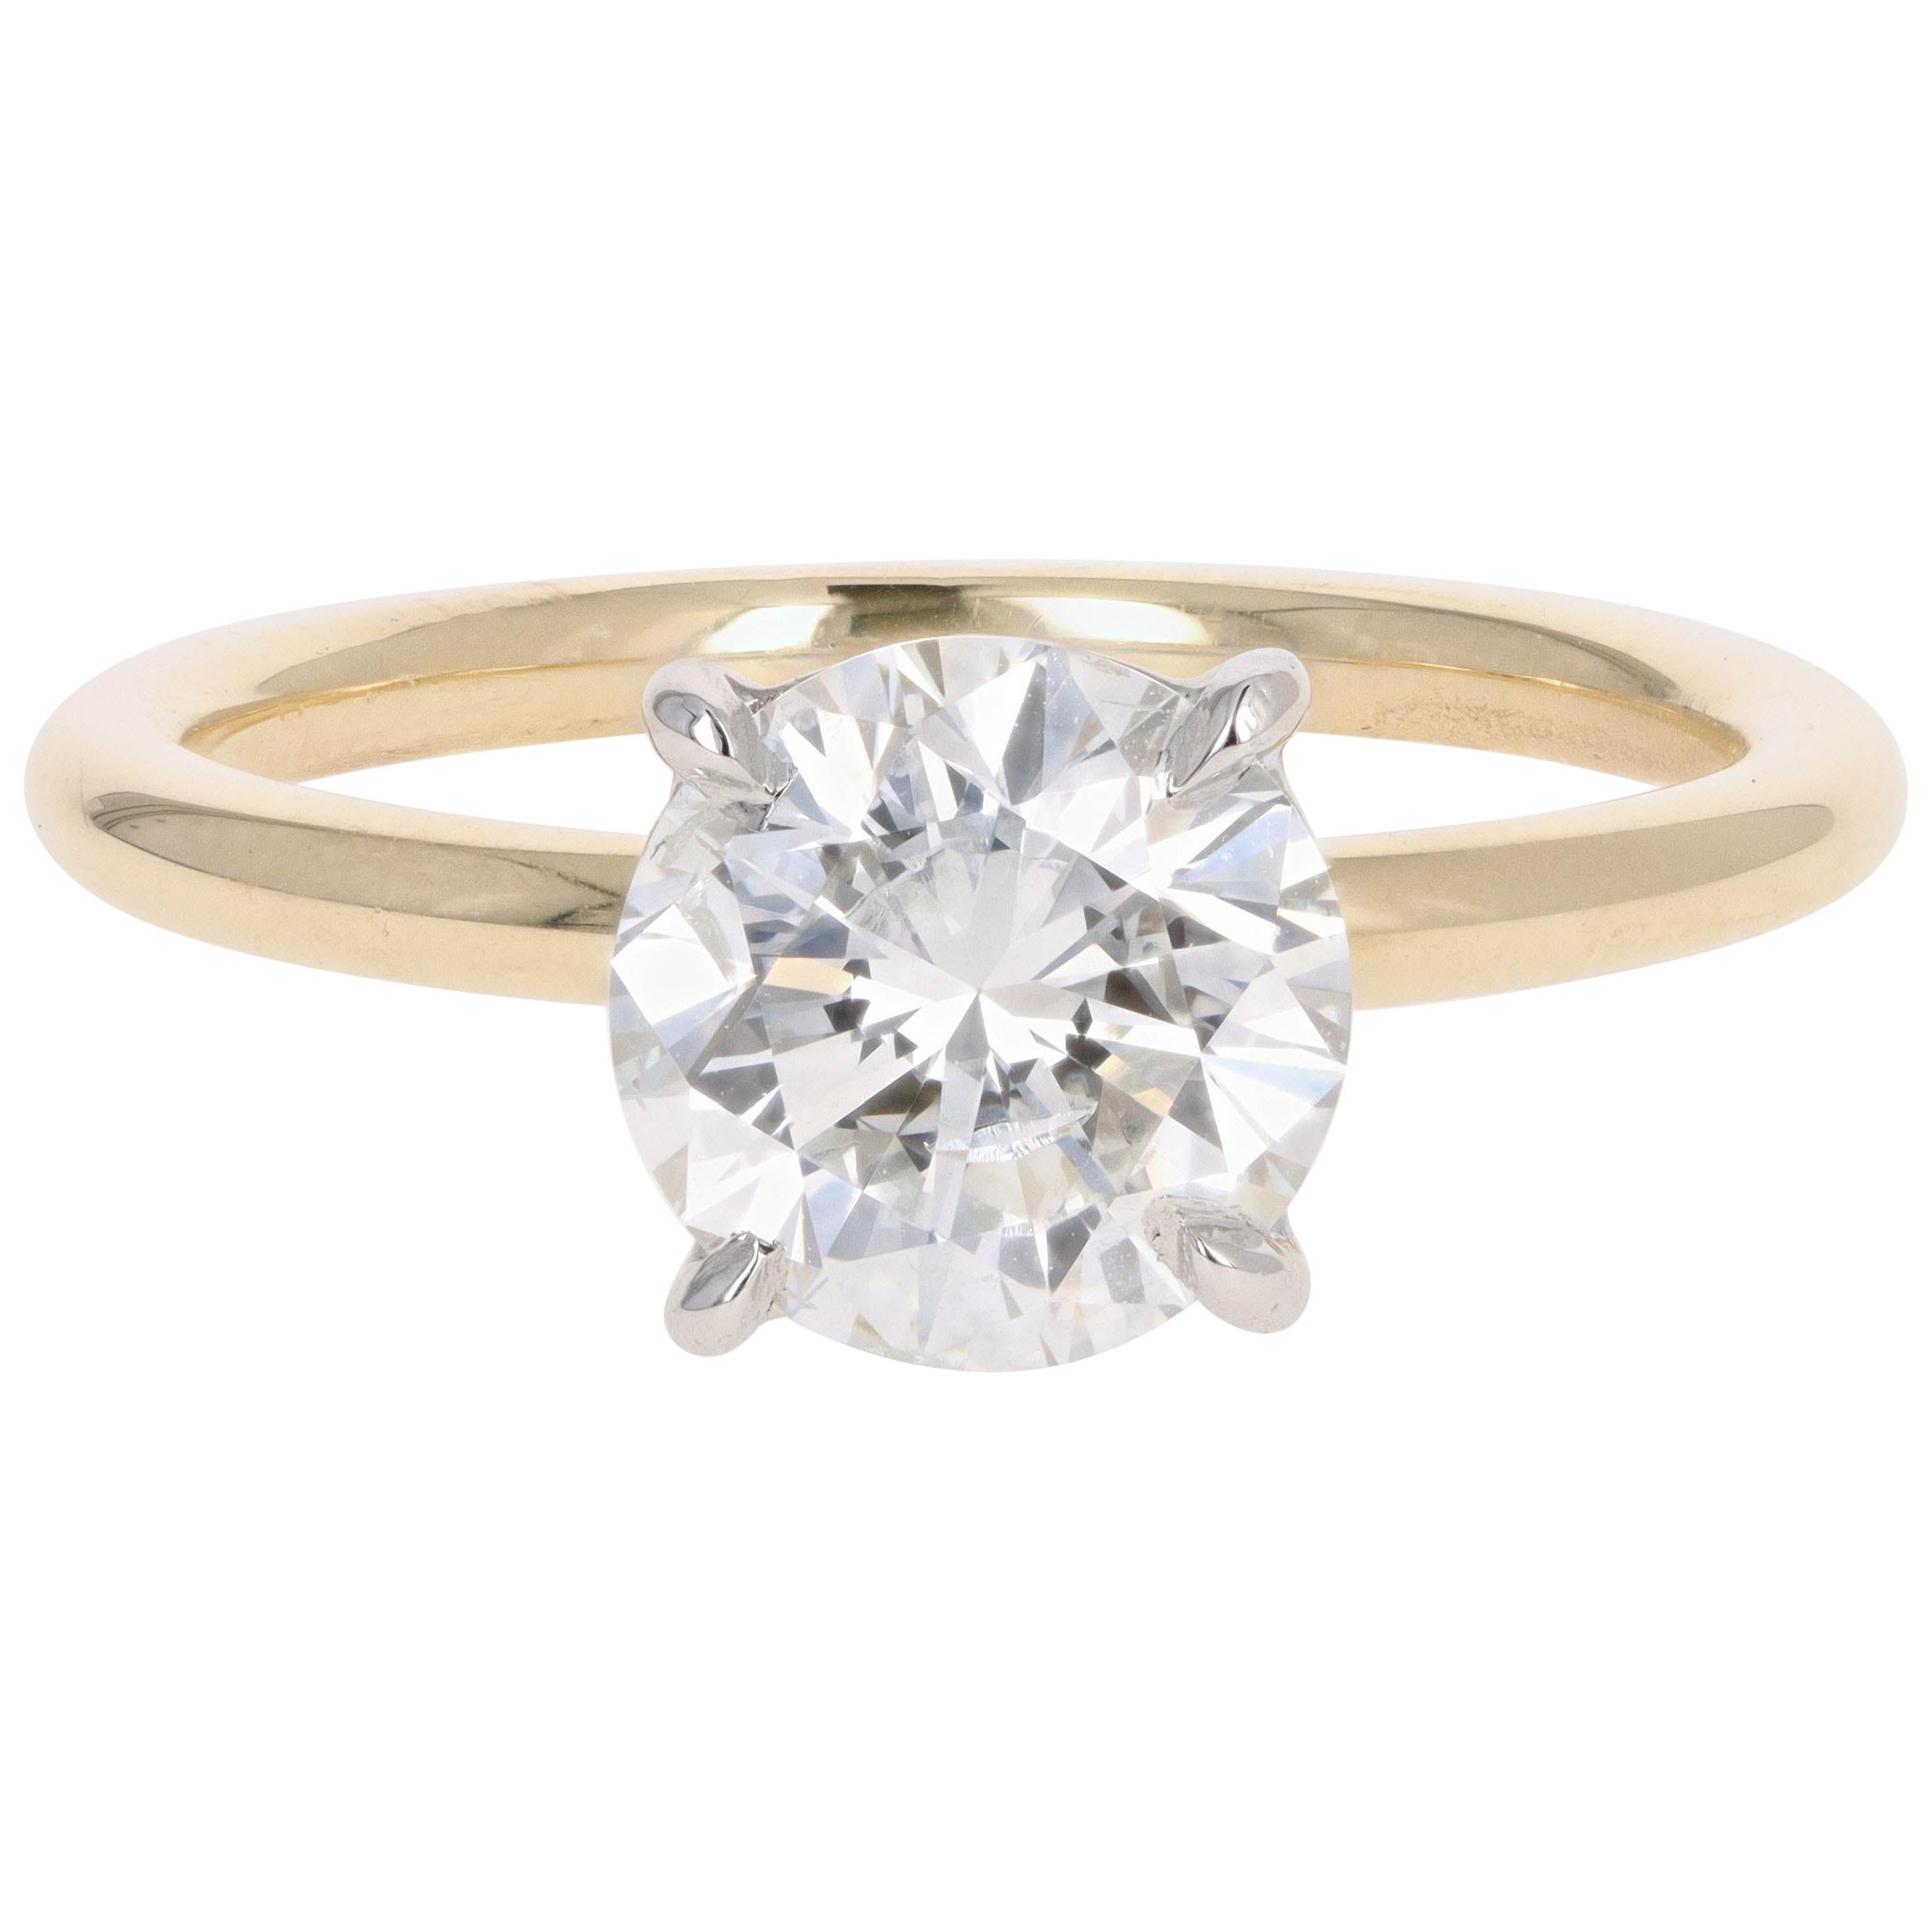 Yellow Gold and Platinum 2.08 Carat Round Brilliant Cut Diamond Engagement Ring